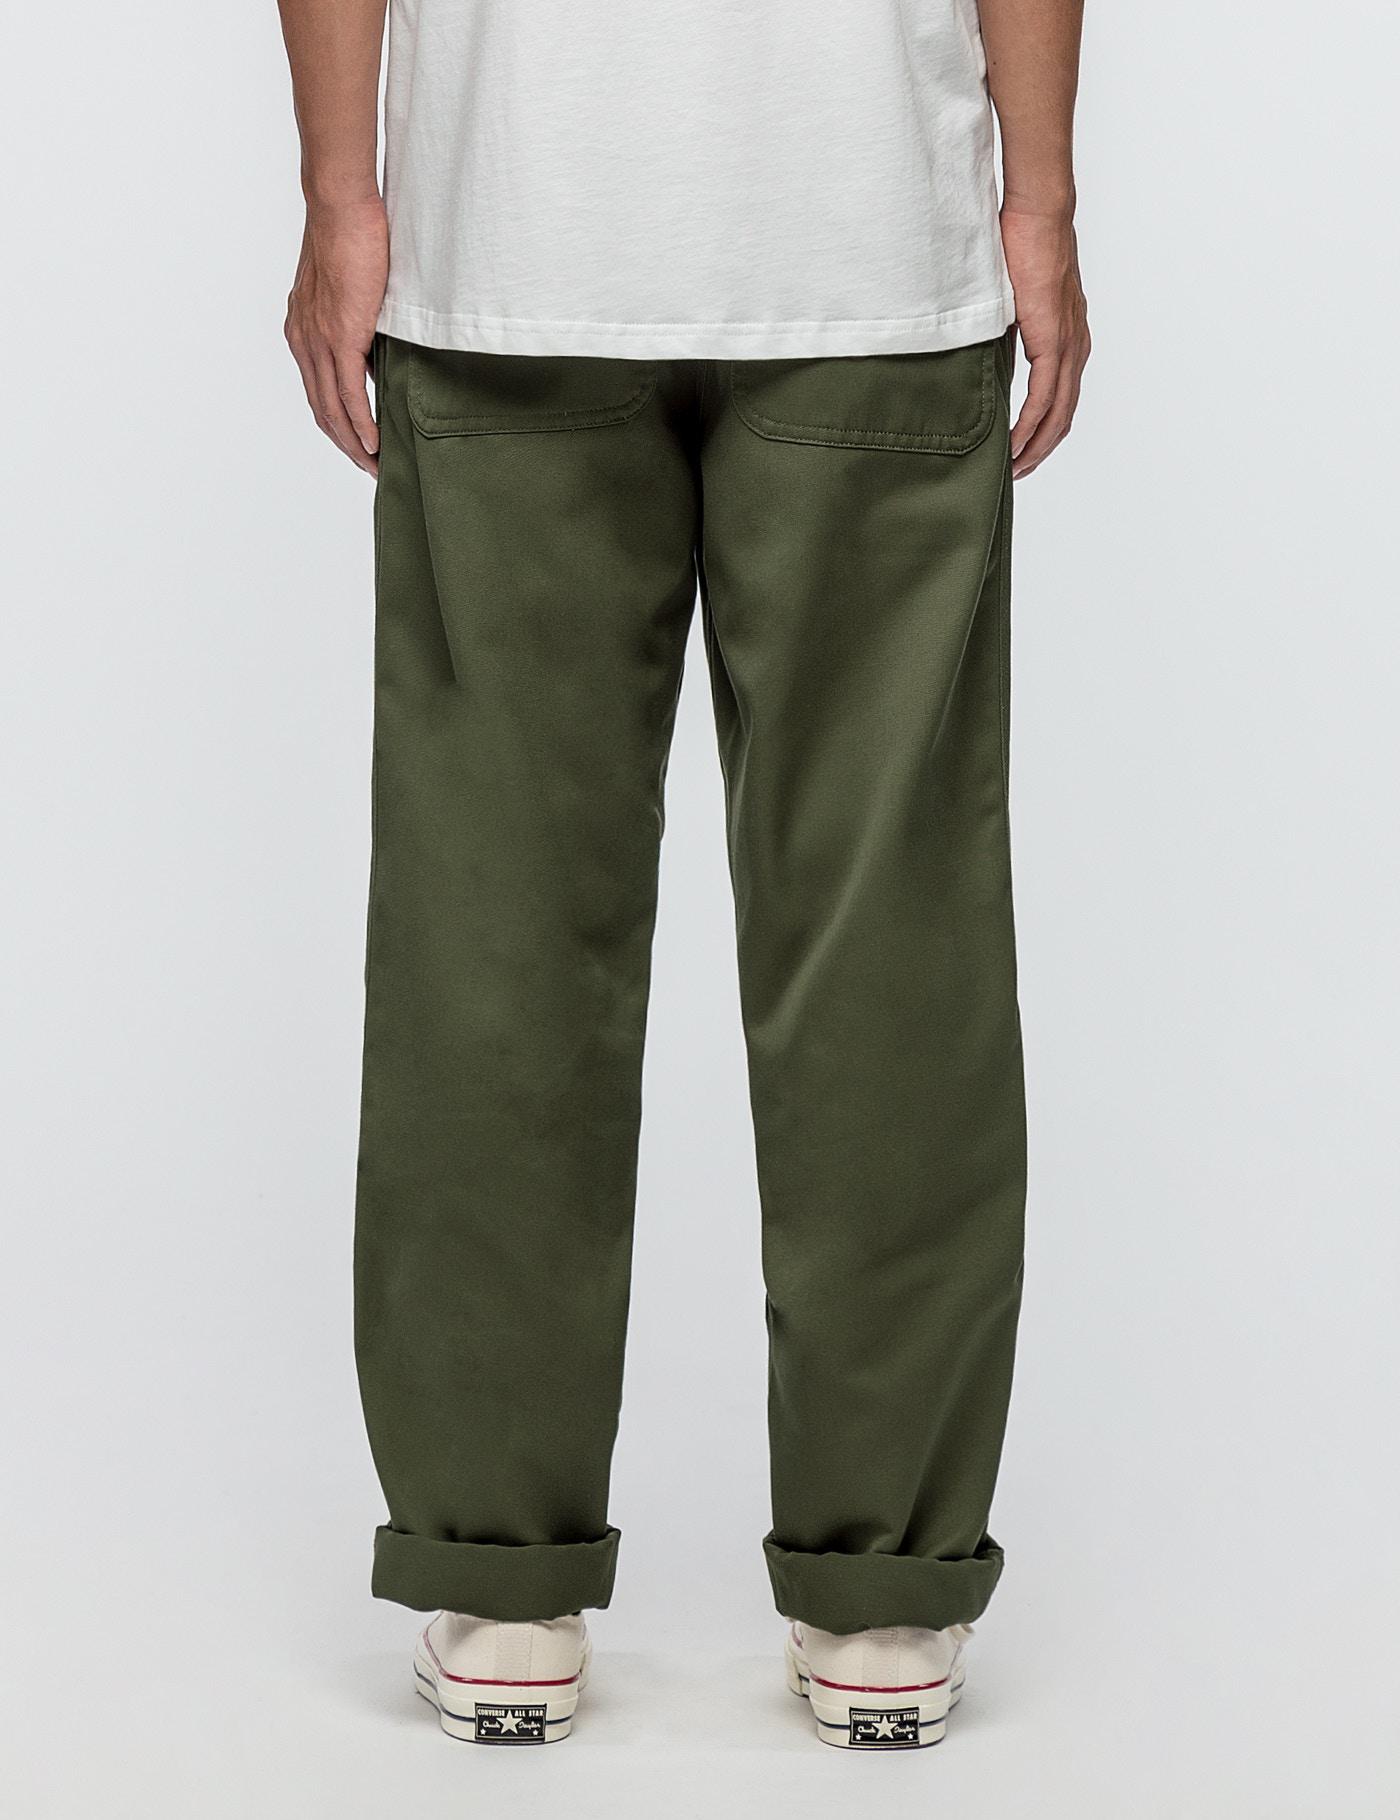 Lyst - Carhartt Wip Simple Pants in Green for Men